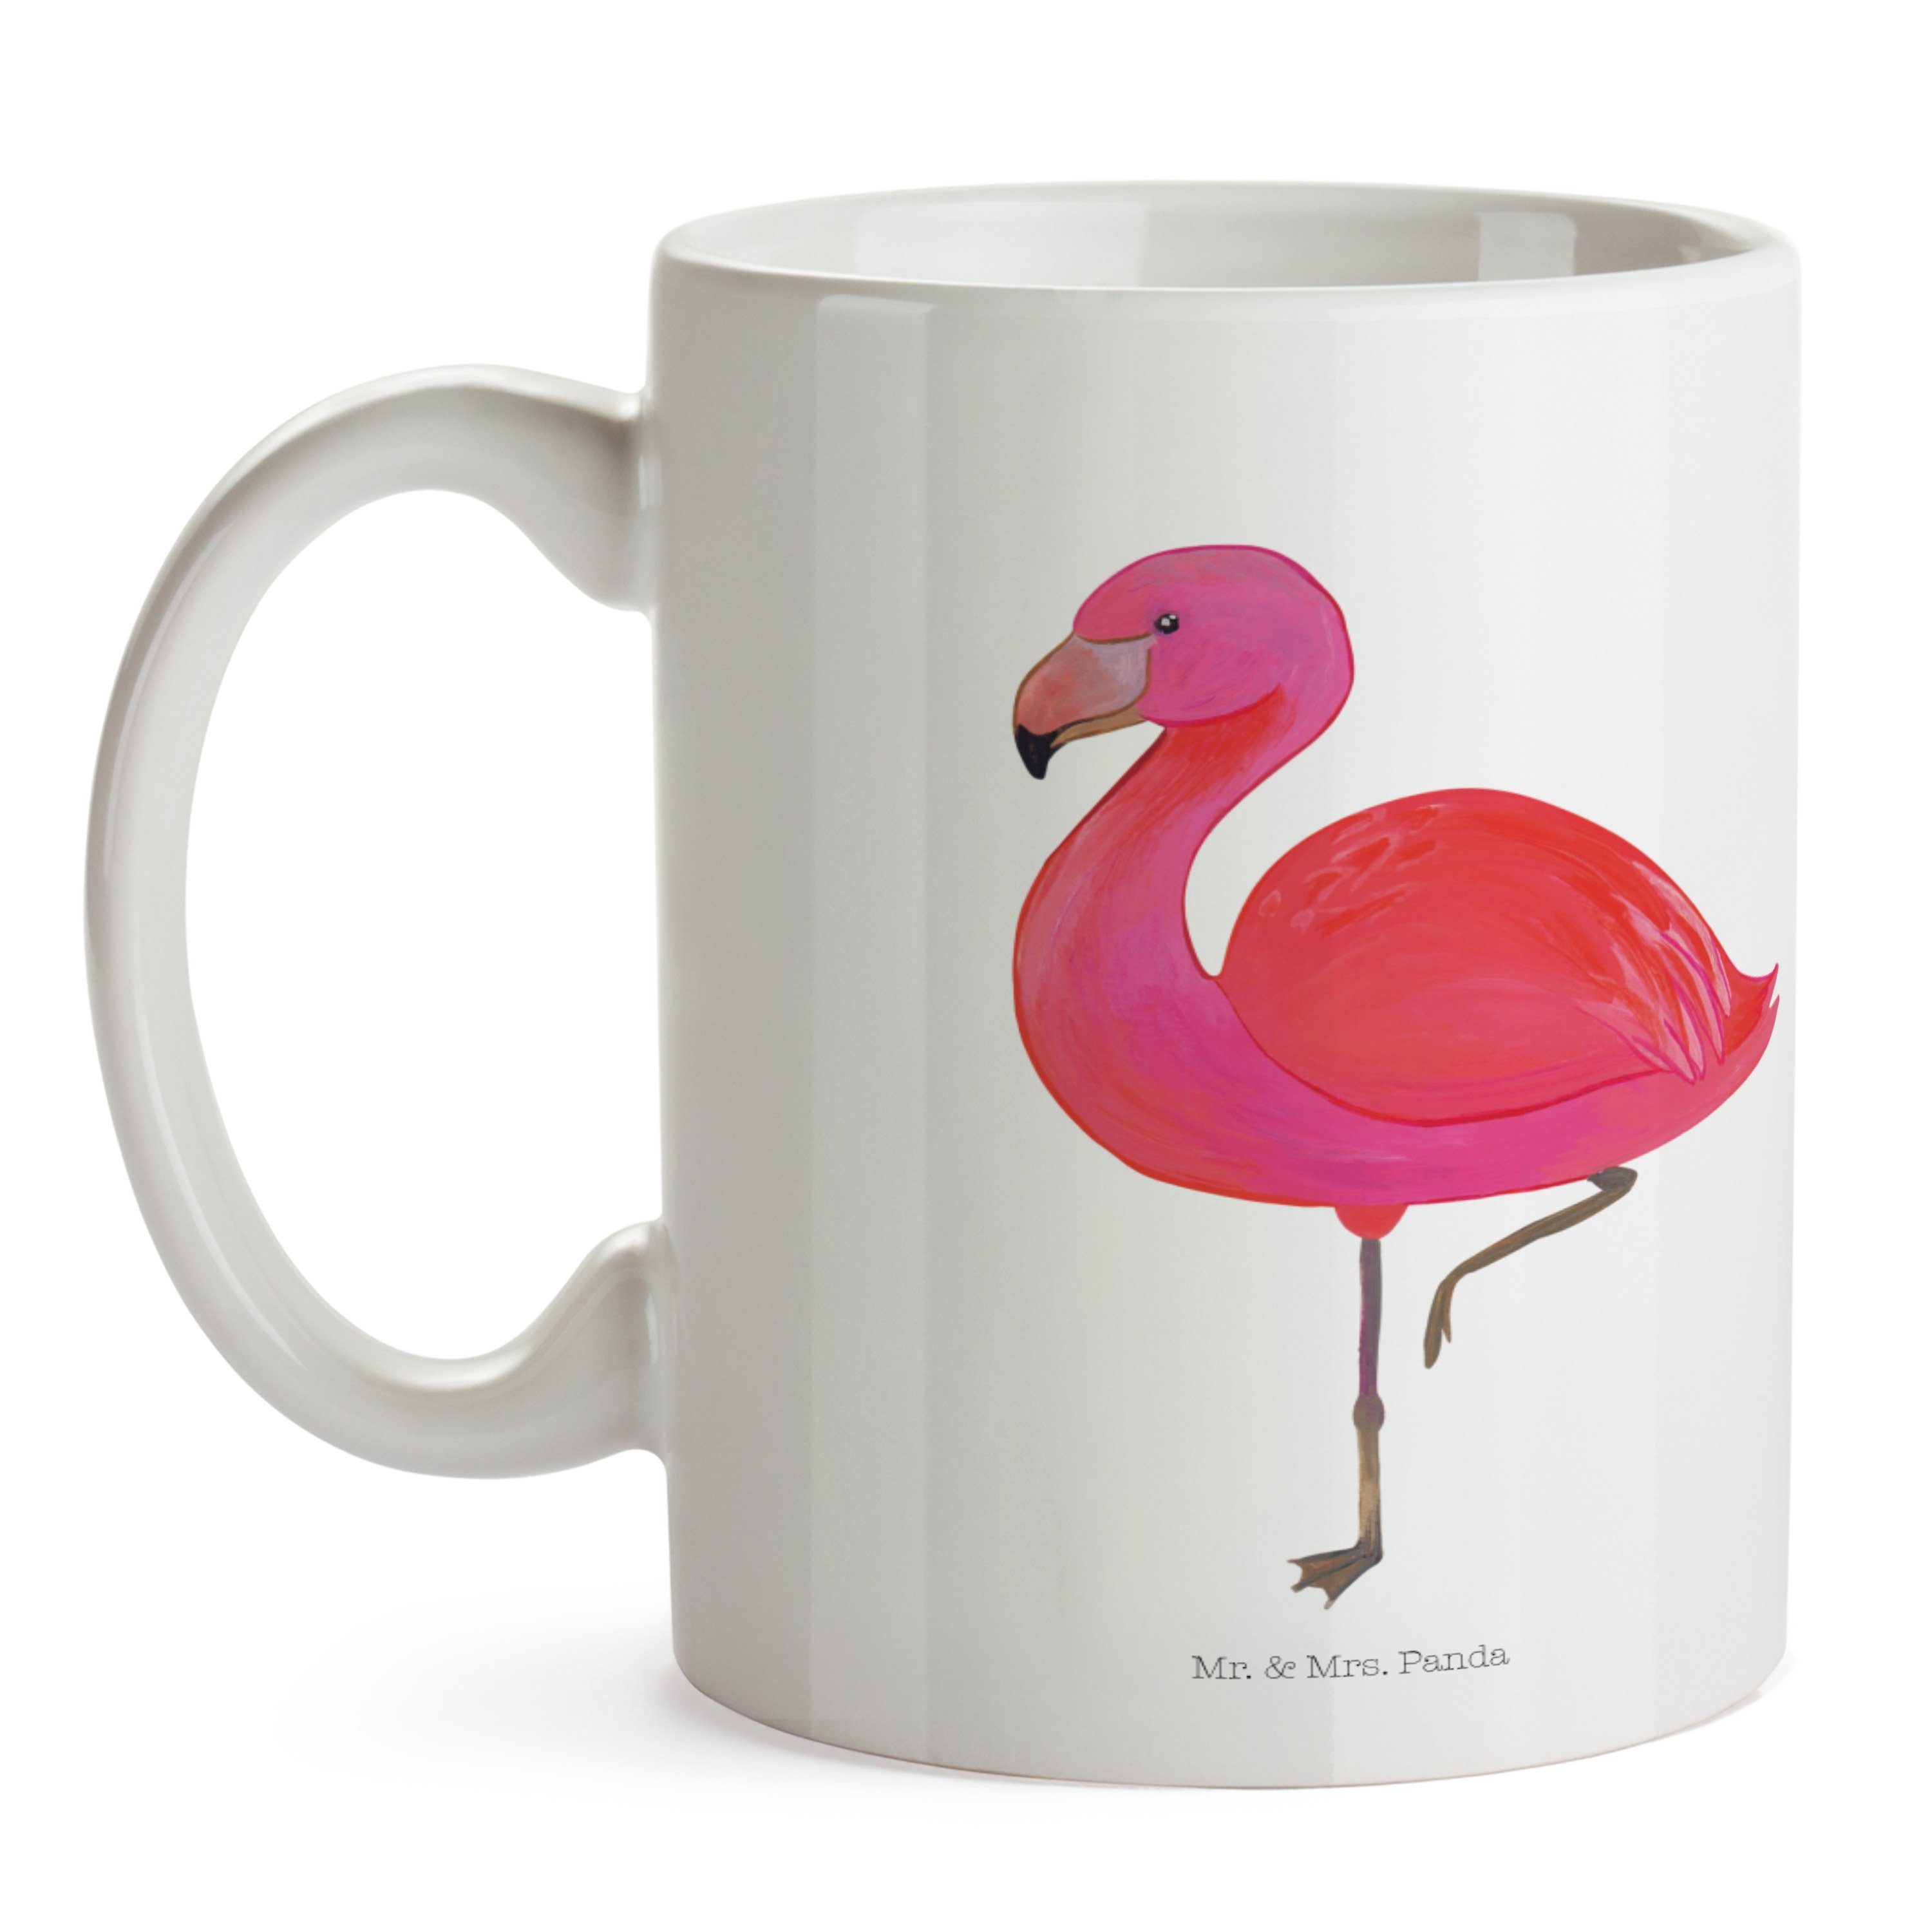 Mr. & Mrs. Panda Tasse rosa, Weiß classic Tasse, Motive, Tasse - Geschenk, Keramik - Kerami, Flamingo